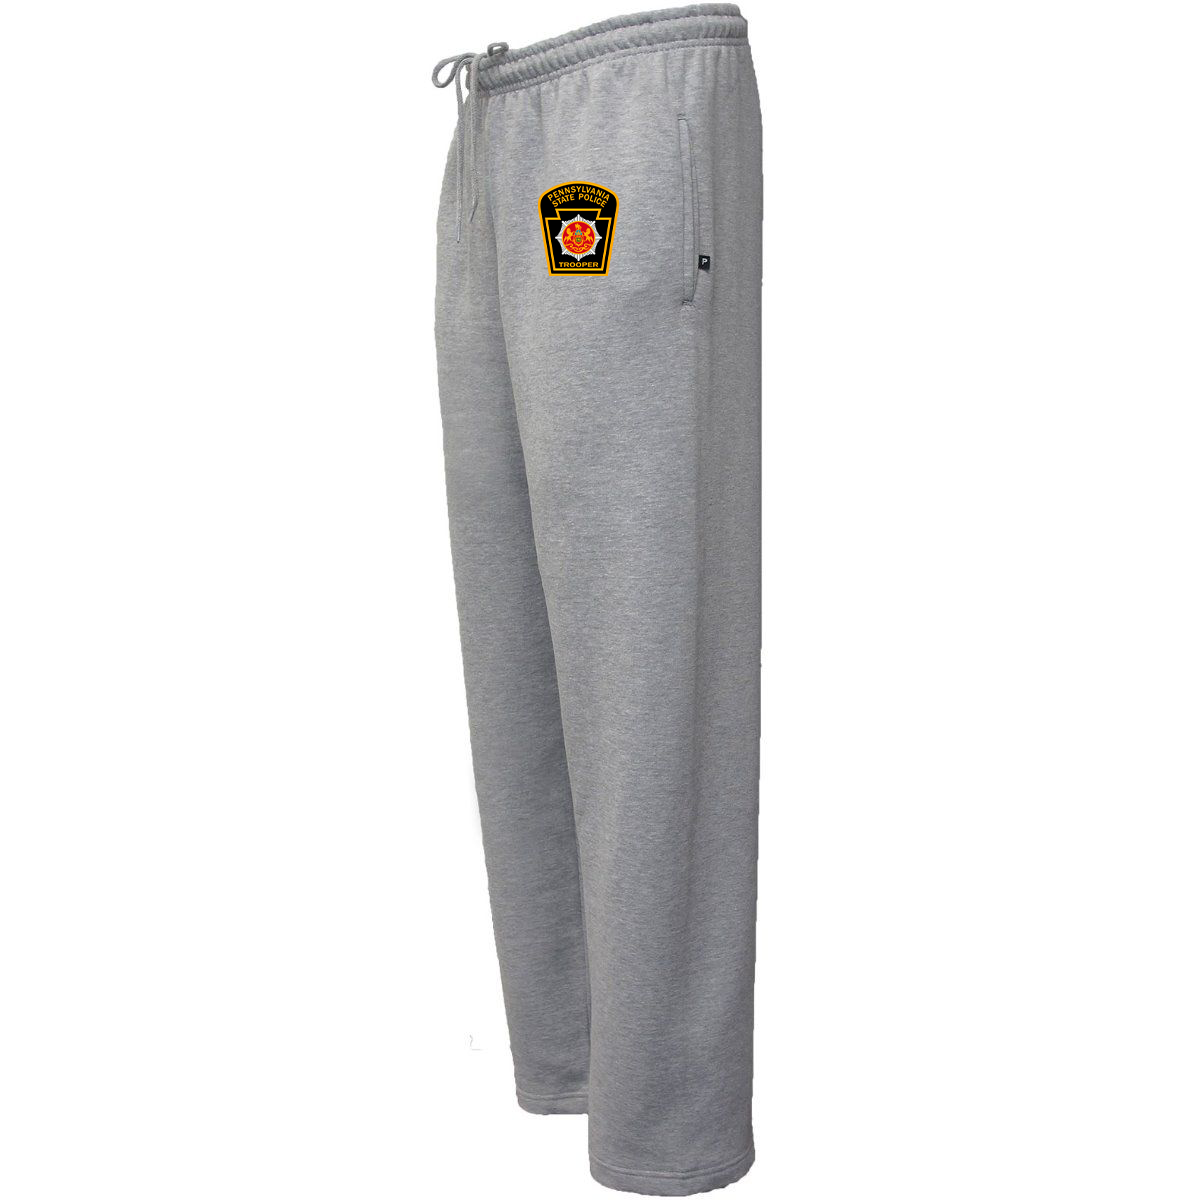 PA State Police Sweatpants